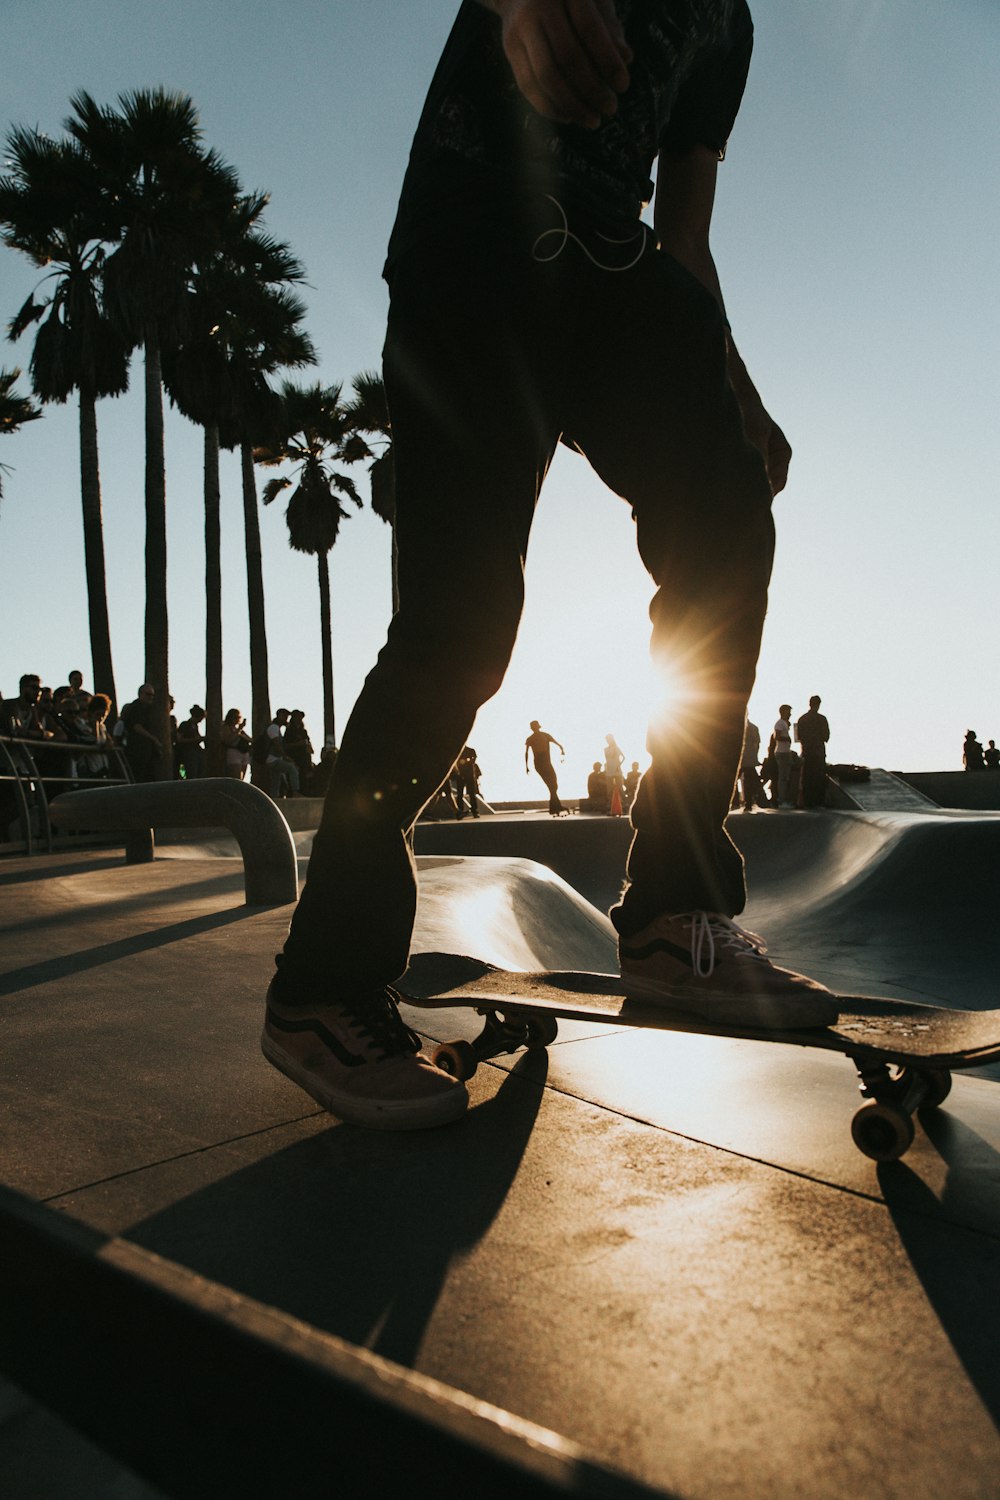 man riding on skateboard